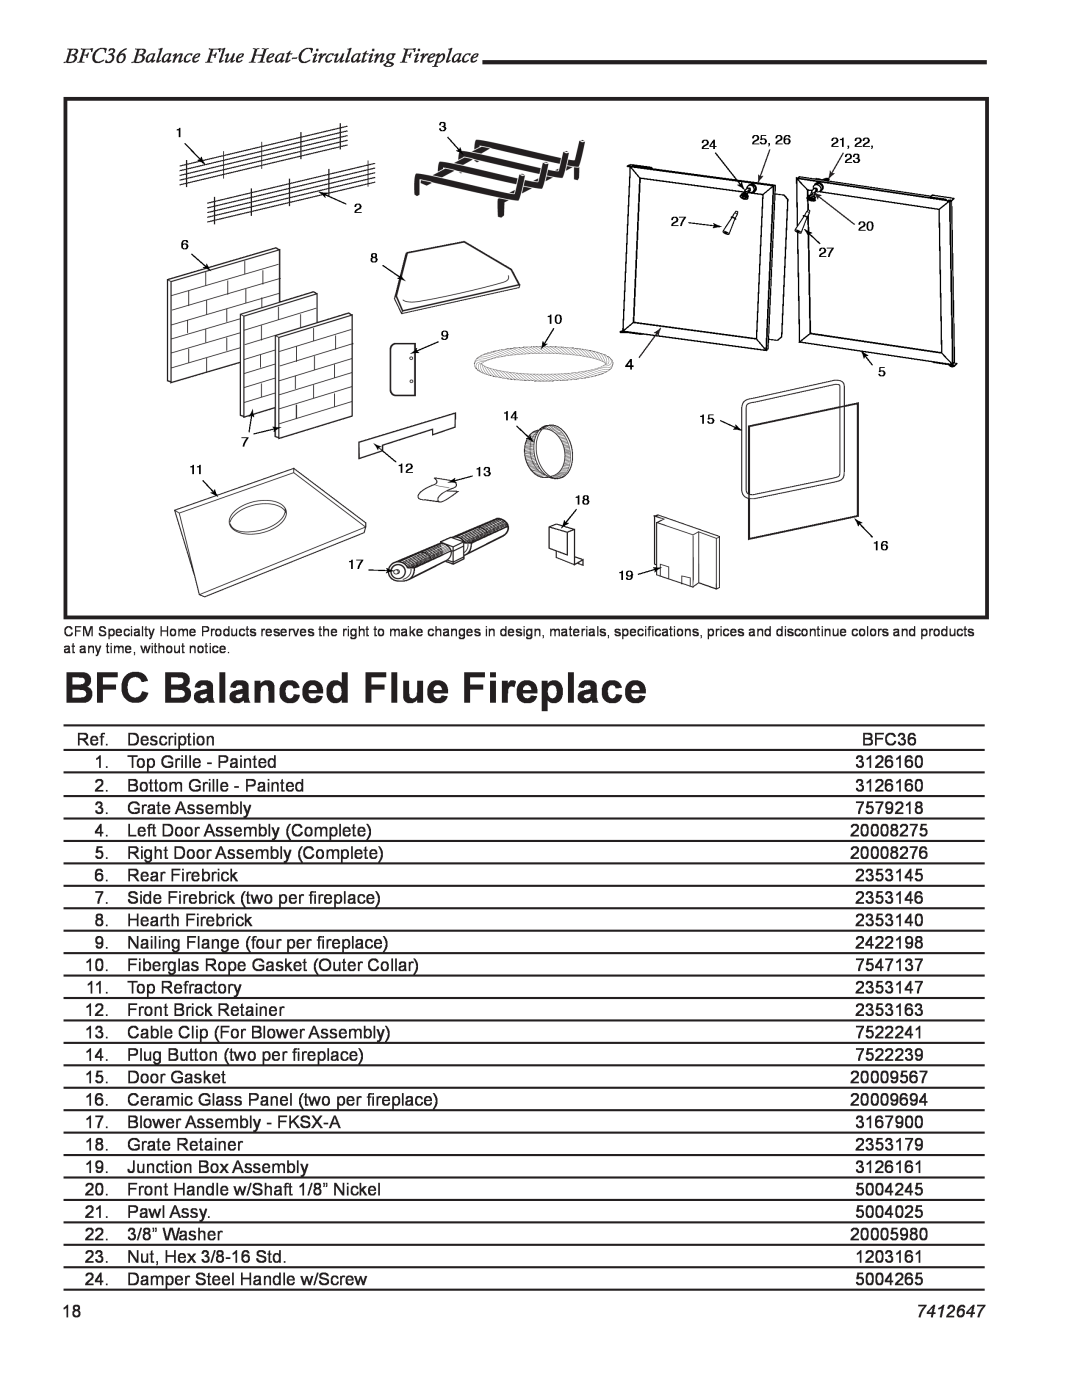 Vermont Casting 647 BFC manual BFC Balanced Flue Fireplace, BFC36 Balance Flue Heat-CirculatingFireplace, 7412647 